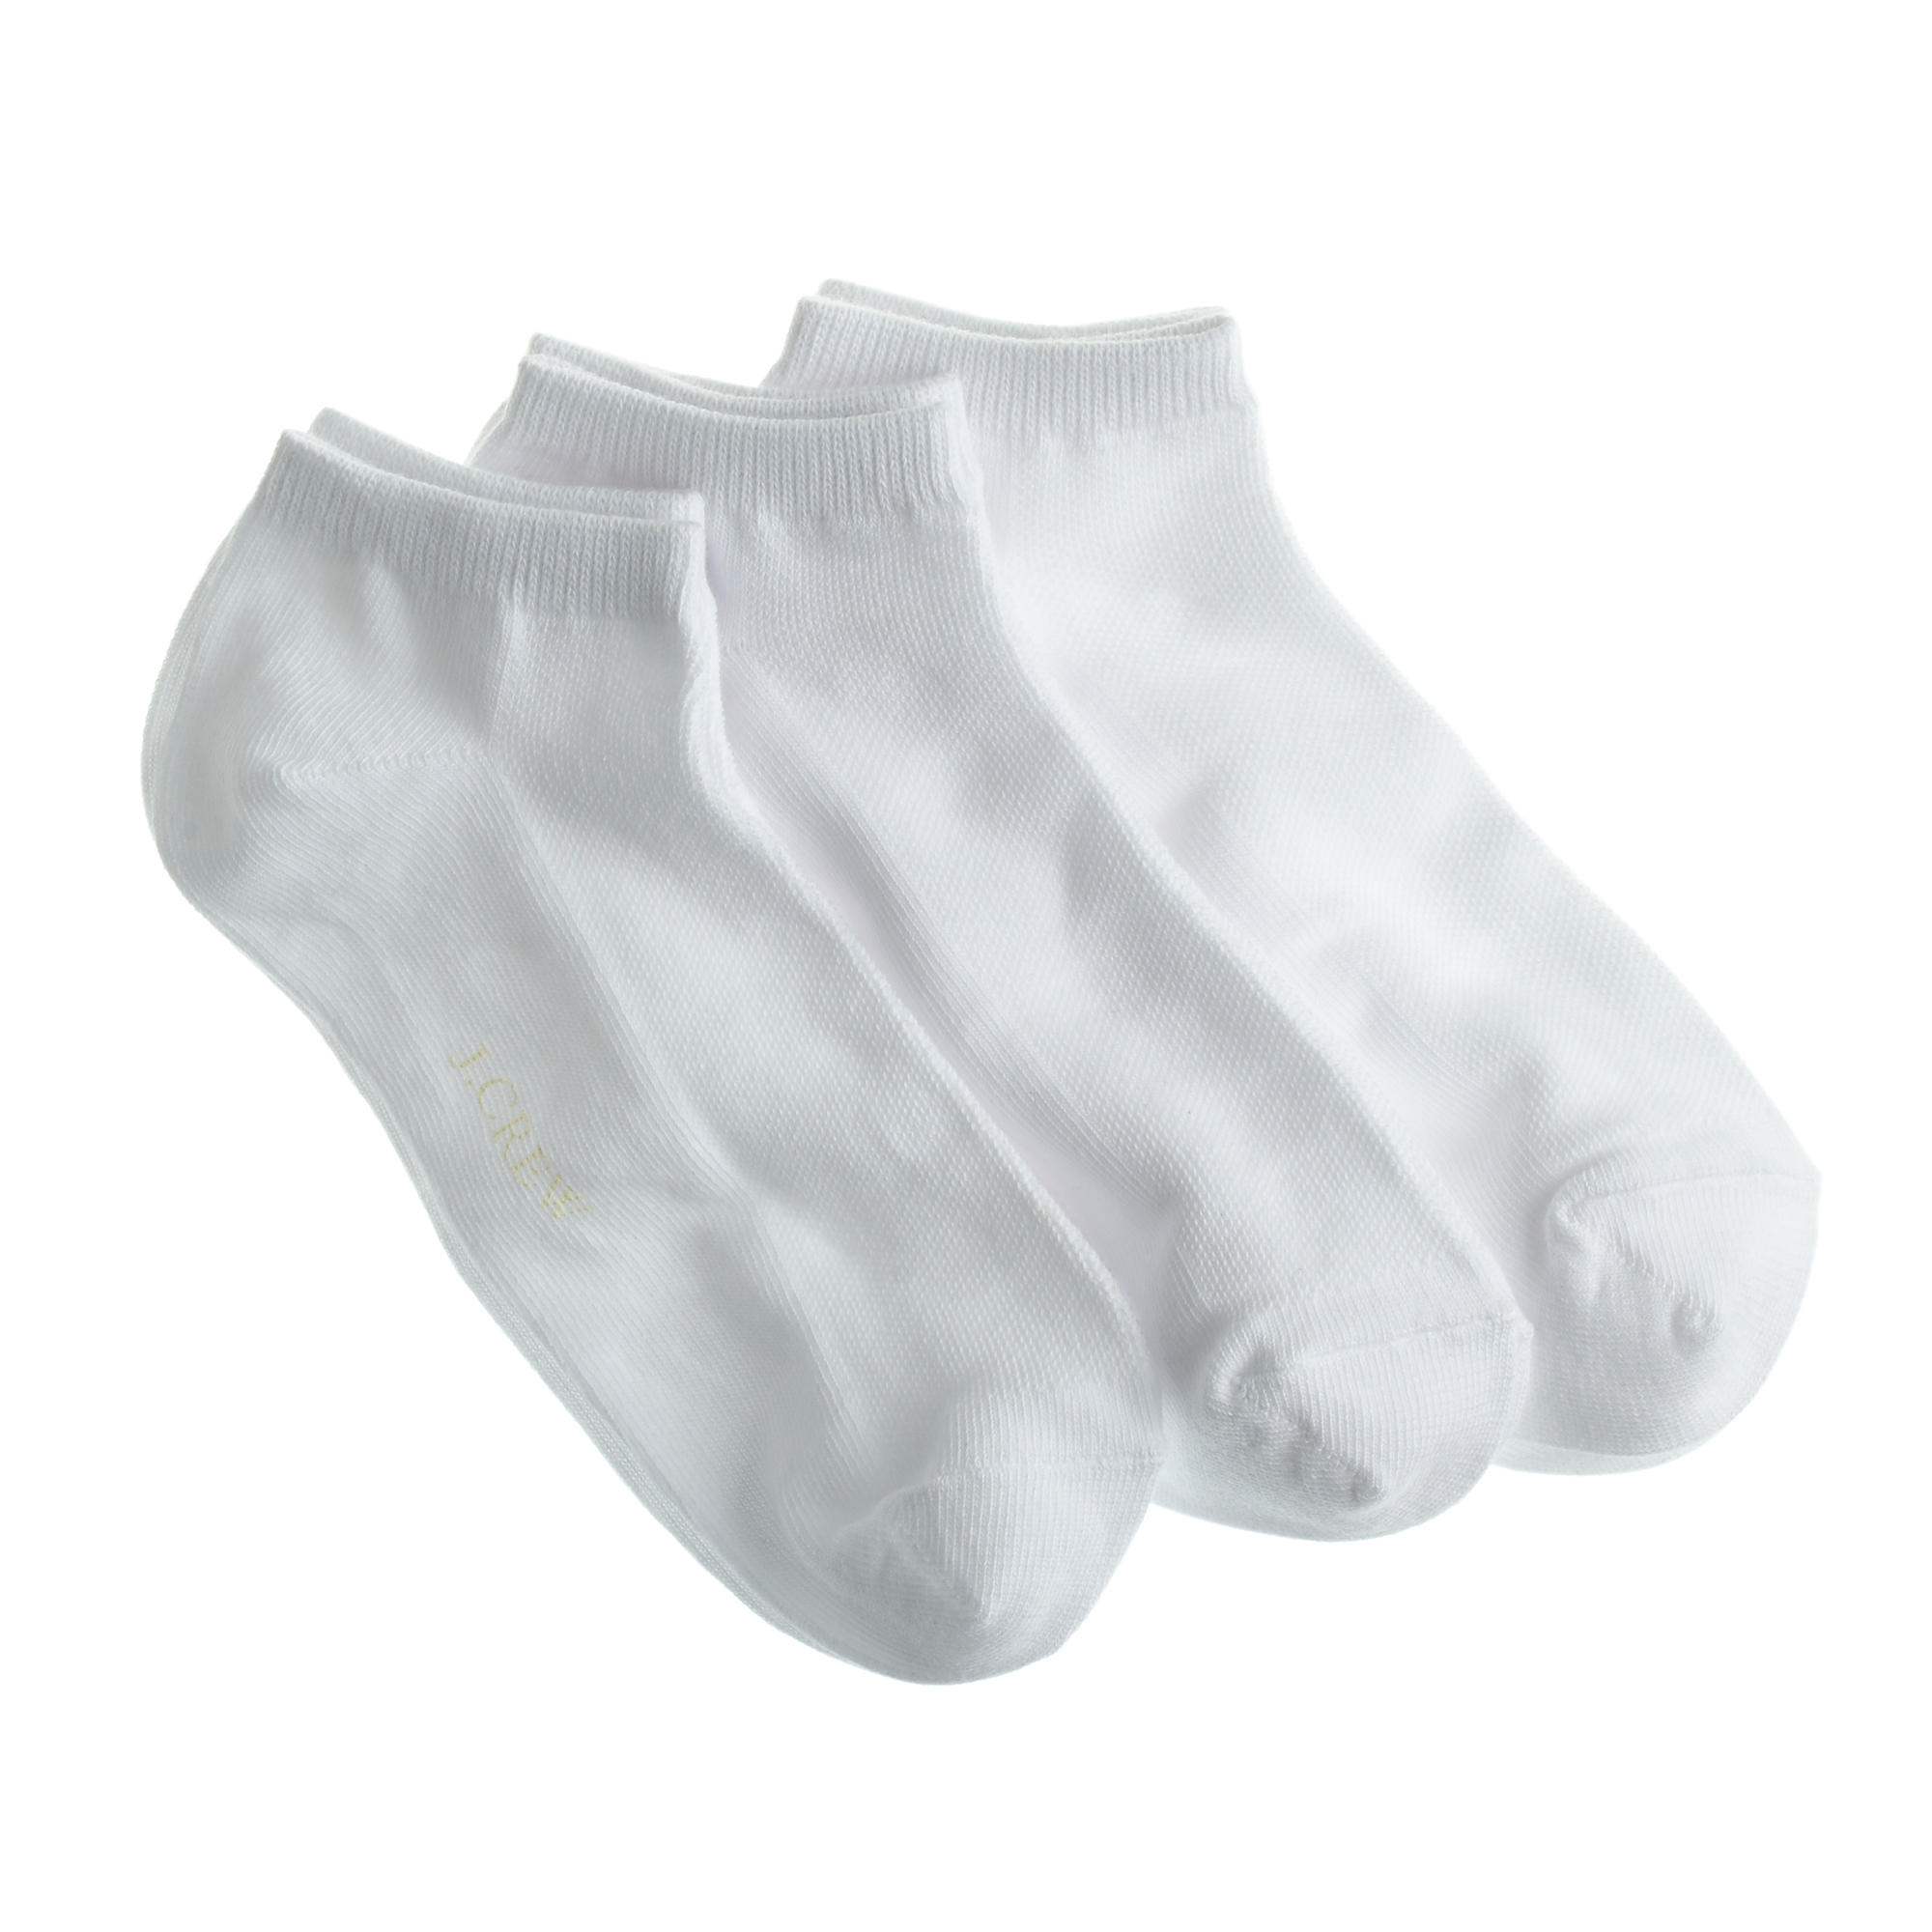 J.crew Ankle Socks Three-pack in White | Lyst